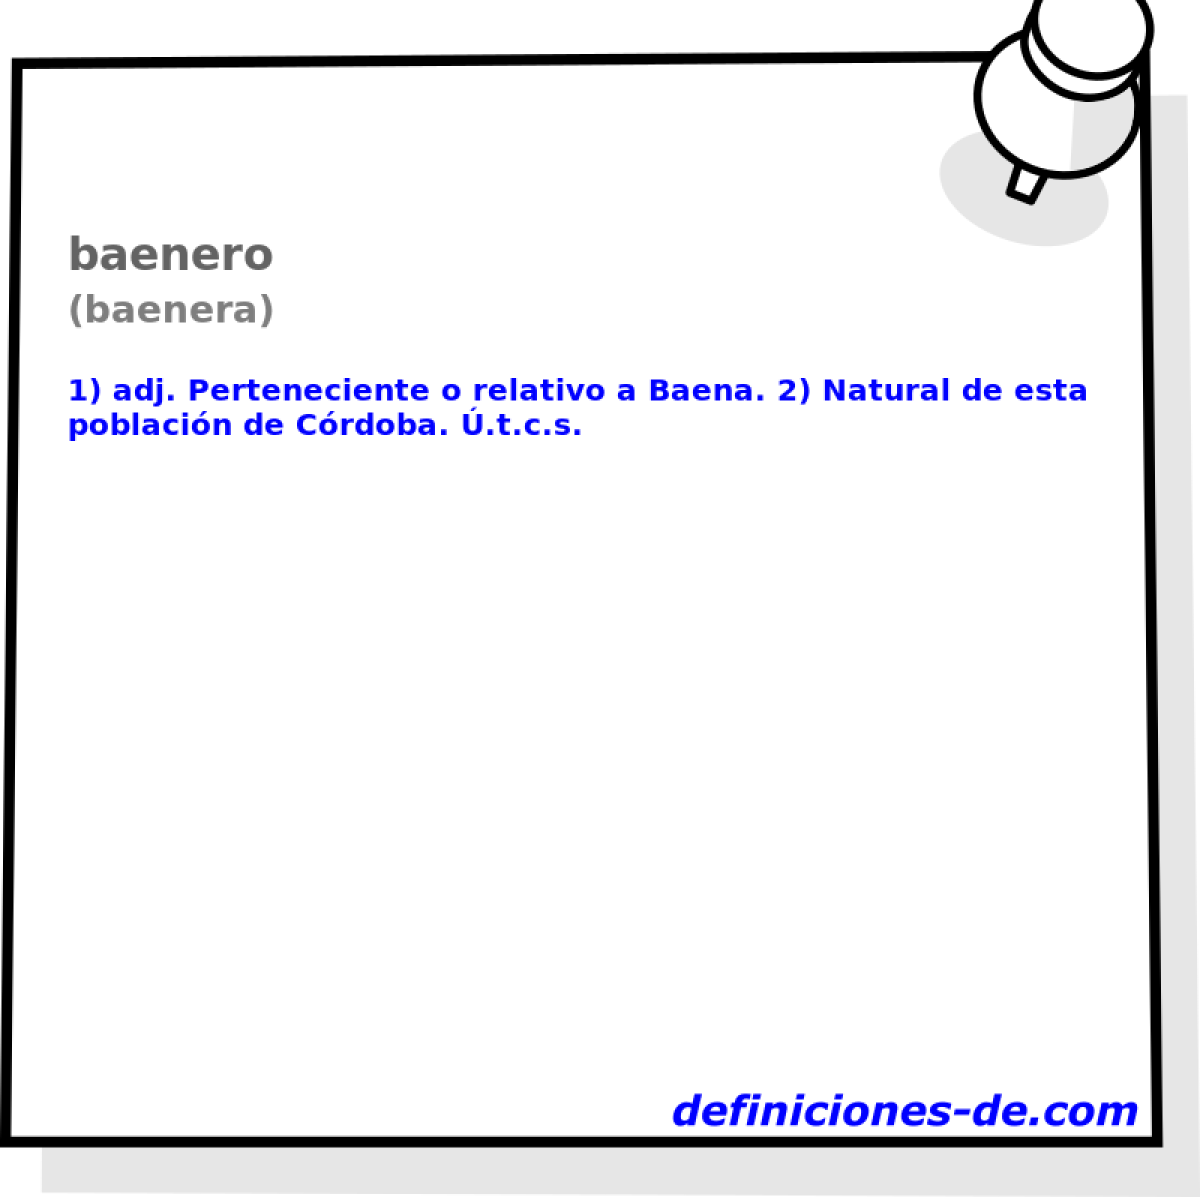 baenero (baenera)